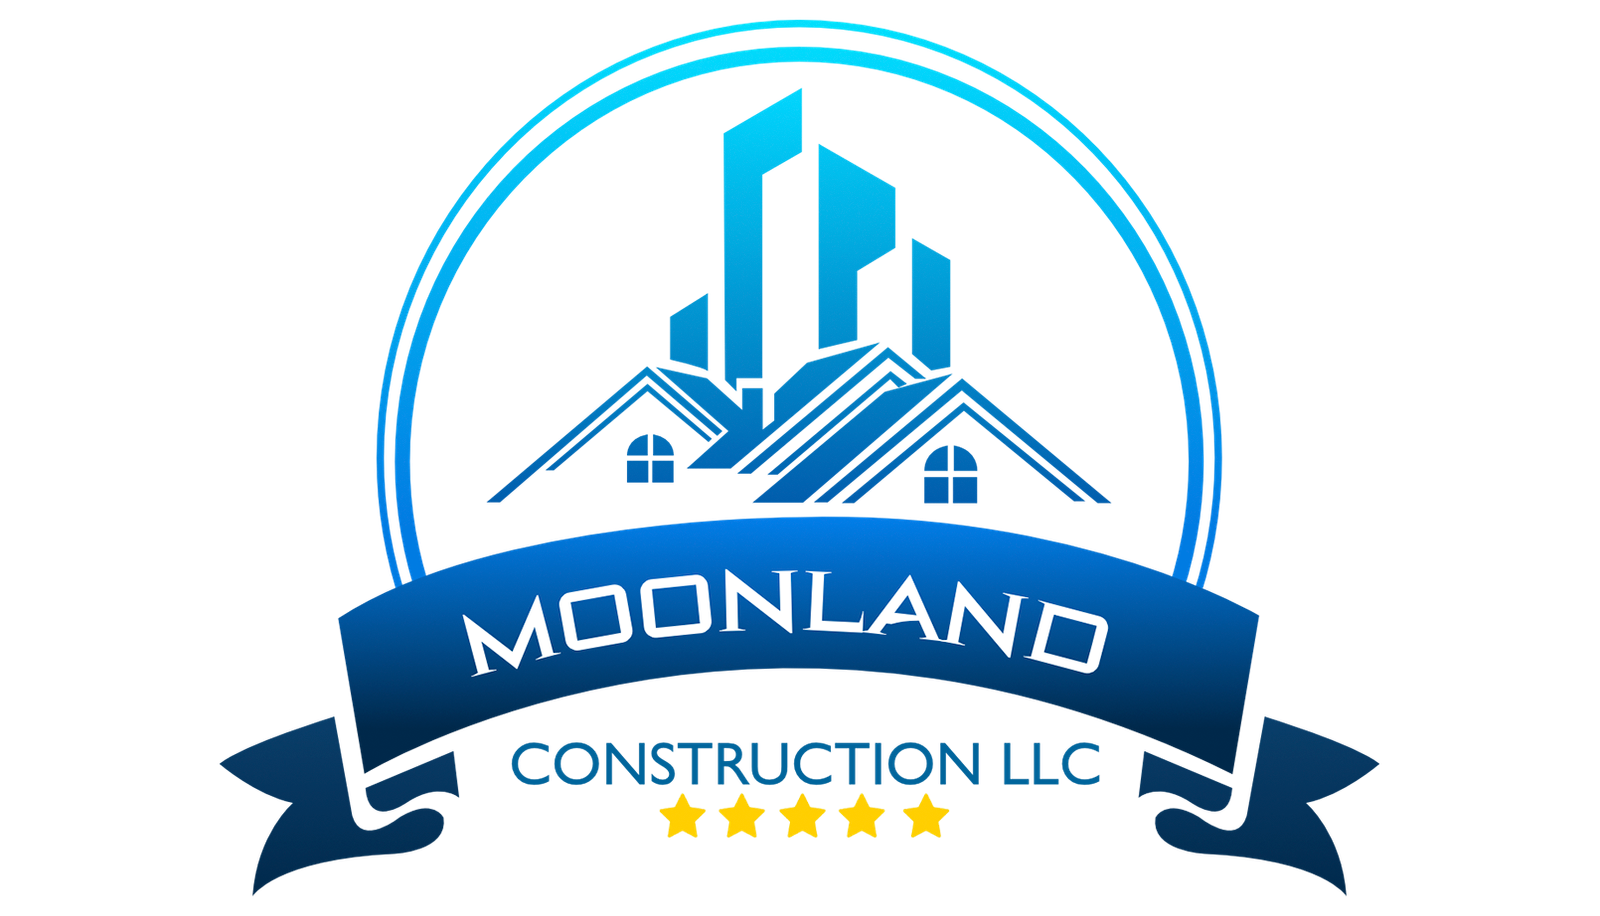 Moonland Construction LLC